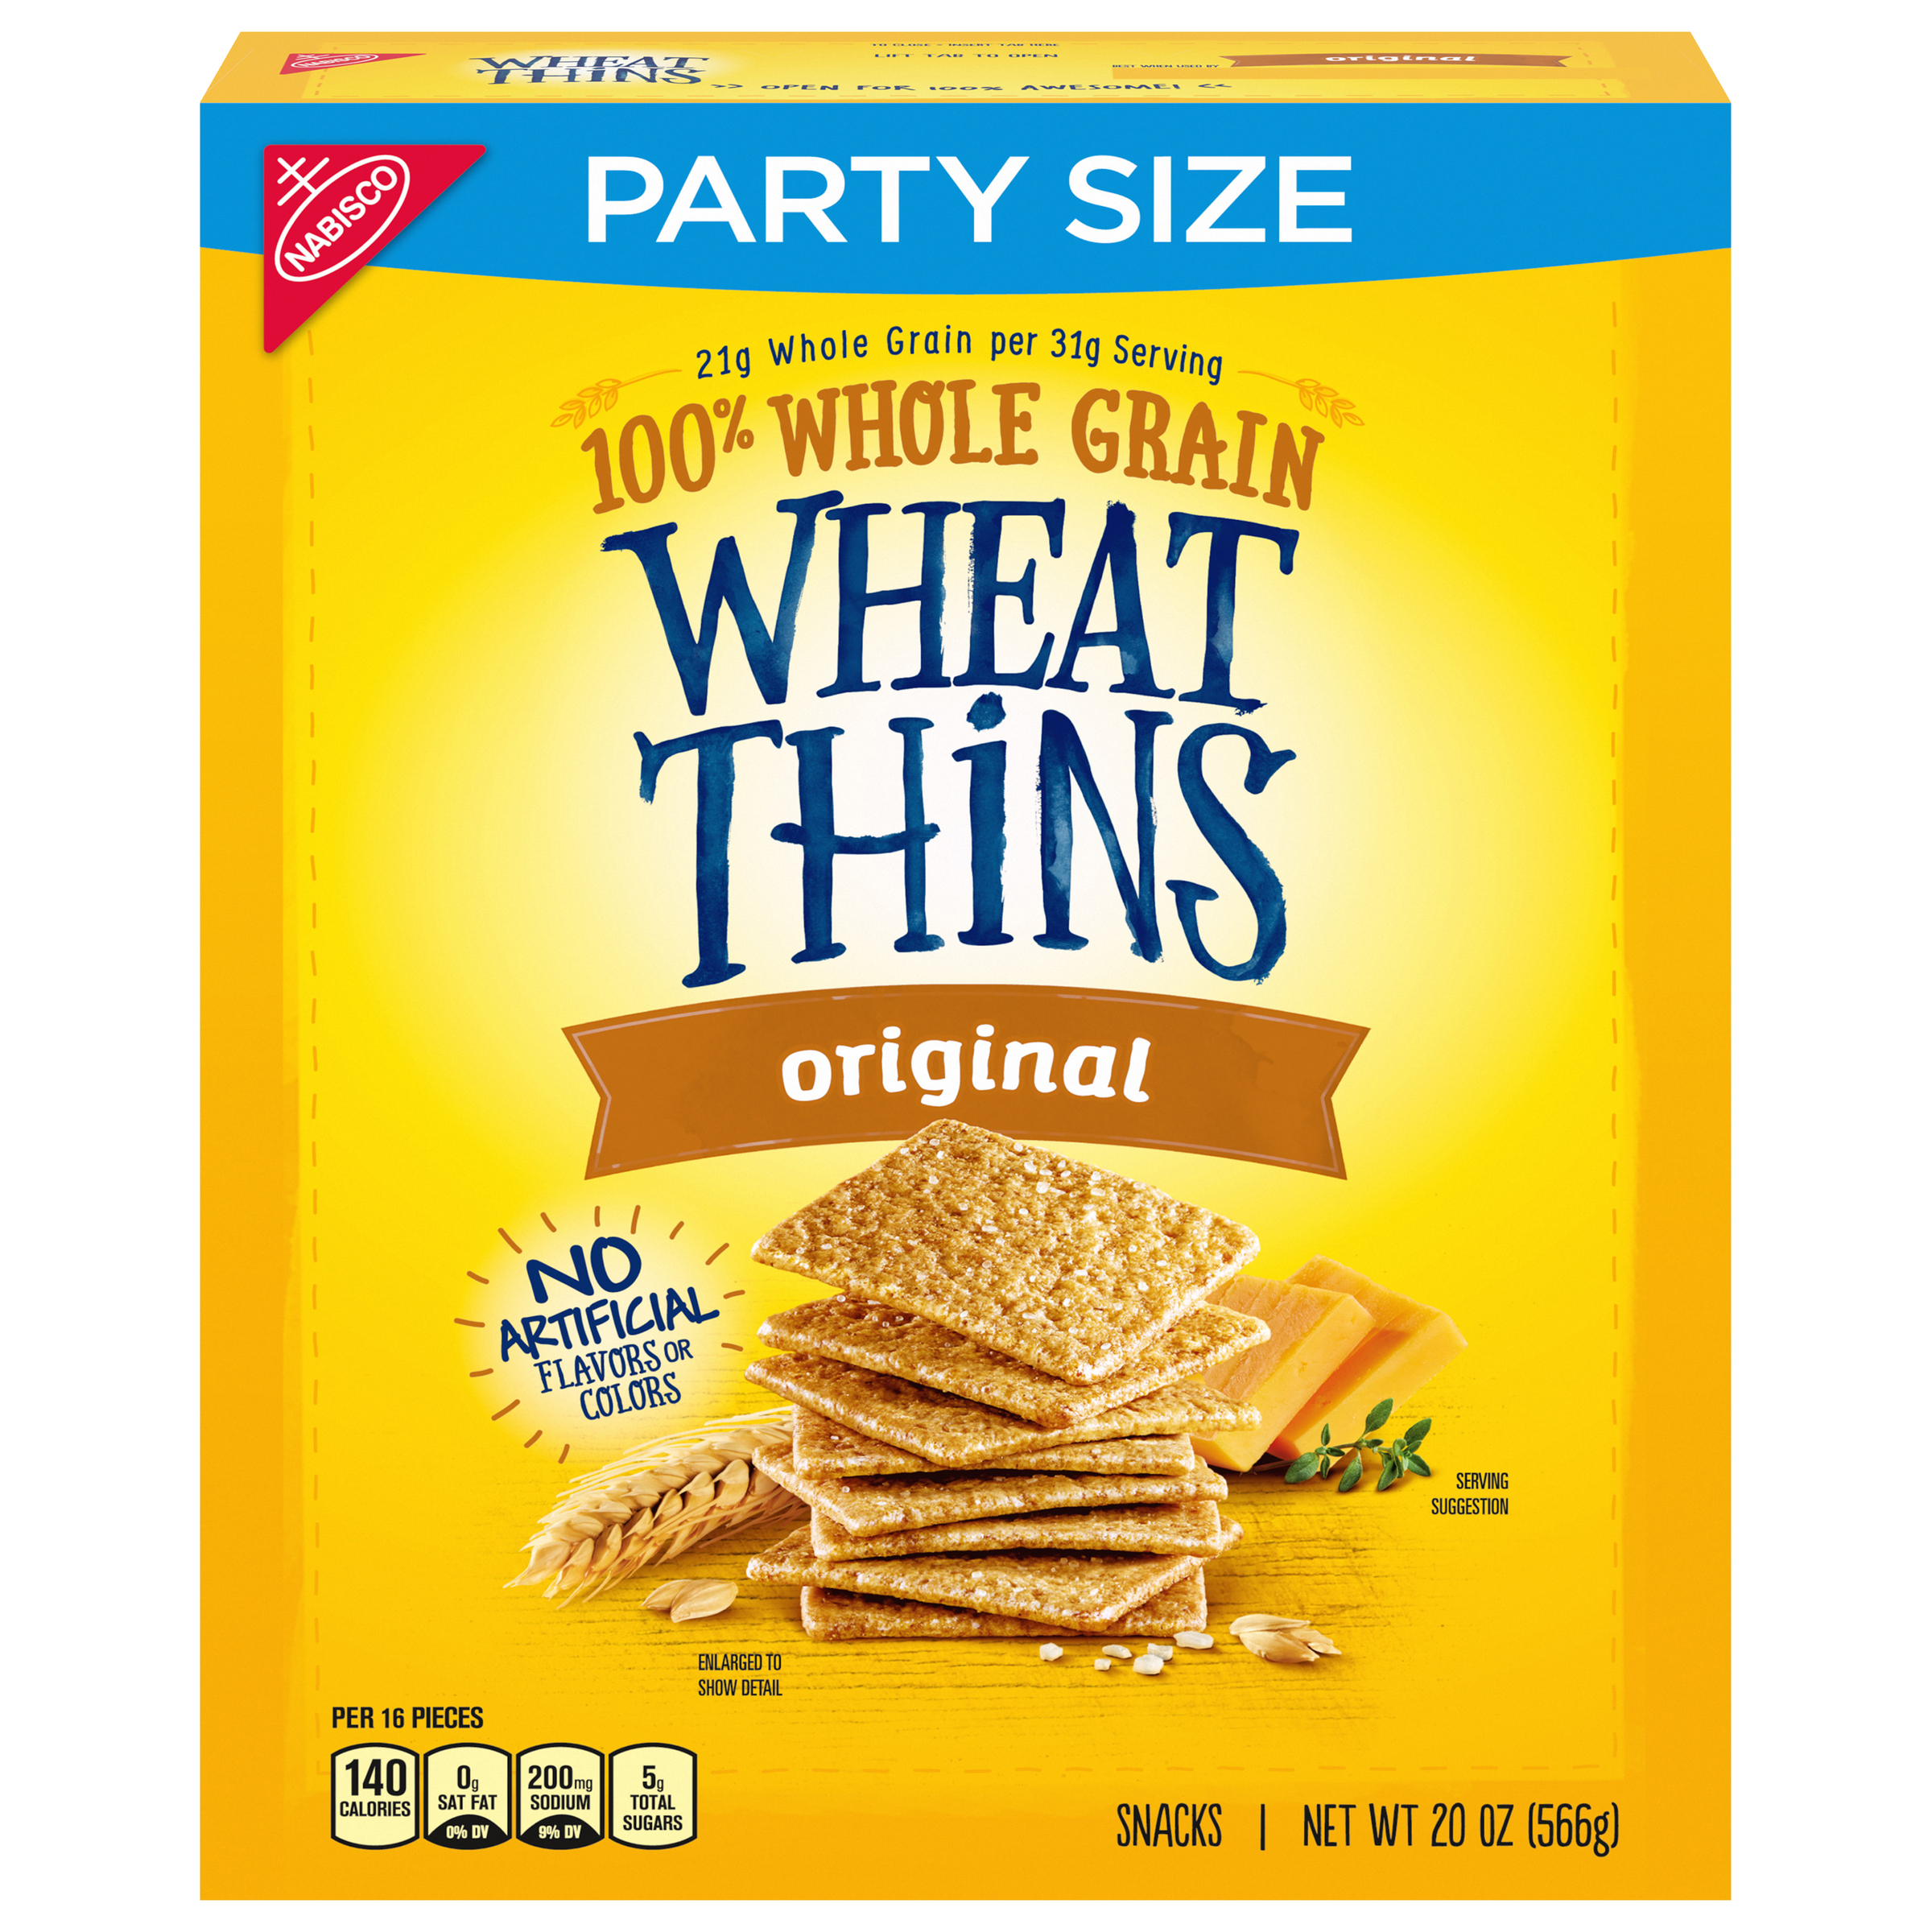 Wheat Thins Original Whole Grain Wheat Crackers, Party Size, 20 oz Box-0